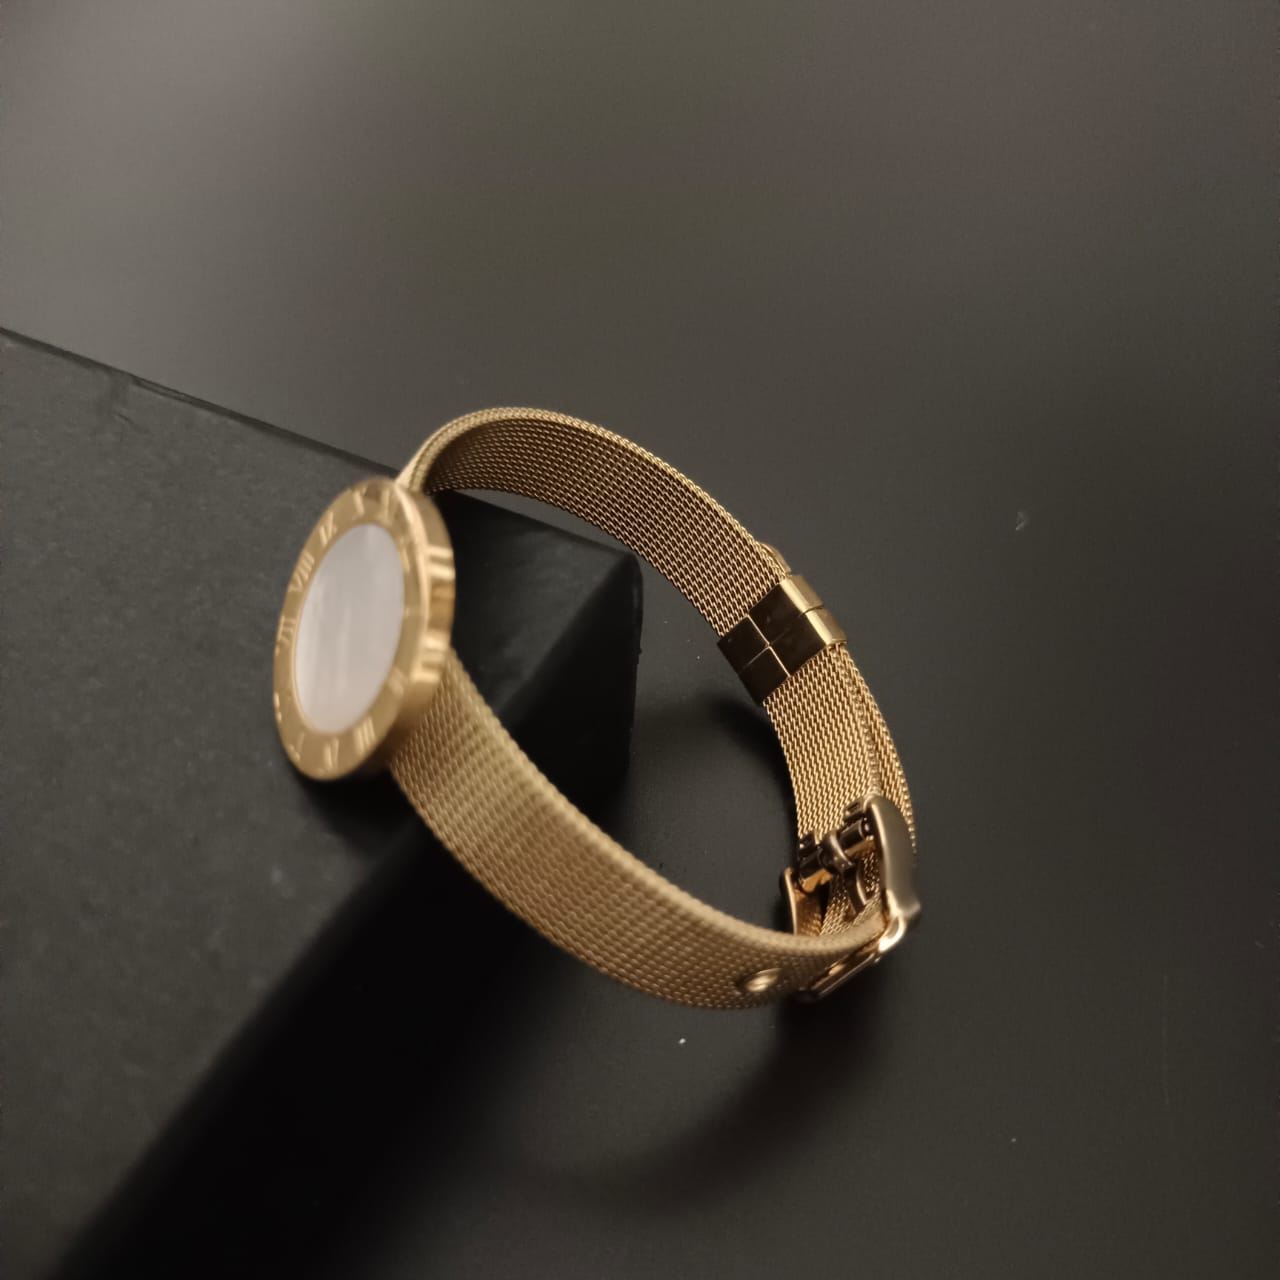 New Golden Watch Design Bracelet For Women and Girl-Jack Marc (White Gold Dial)